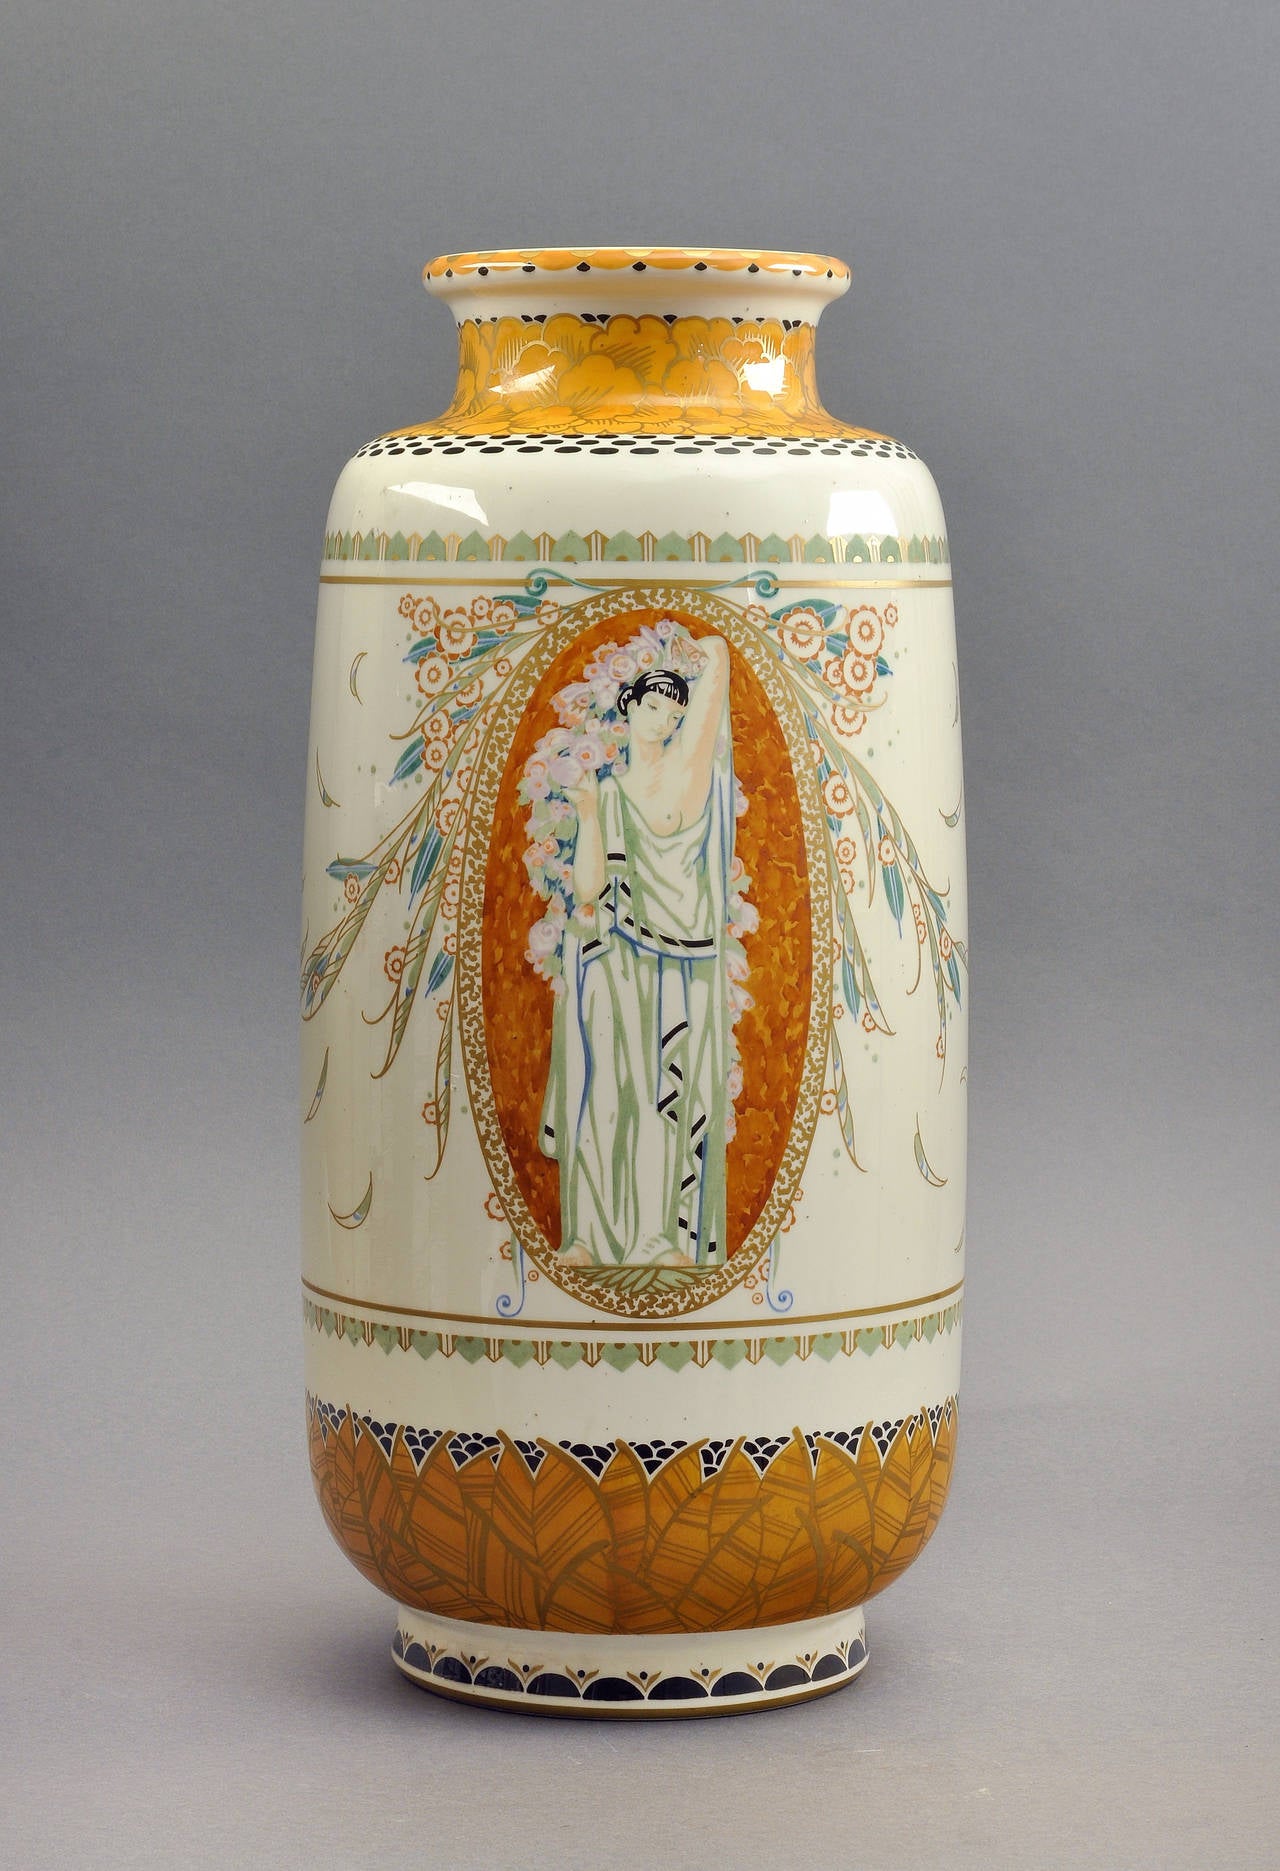 Highly important 1924 manufacture Nationale de Sèvres Porcelain vase.
Fully signed. Mint condition.